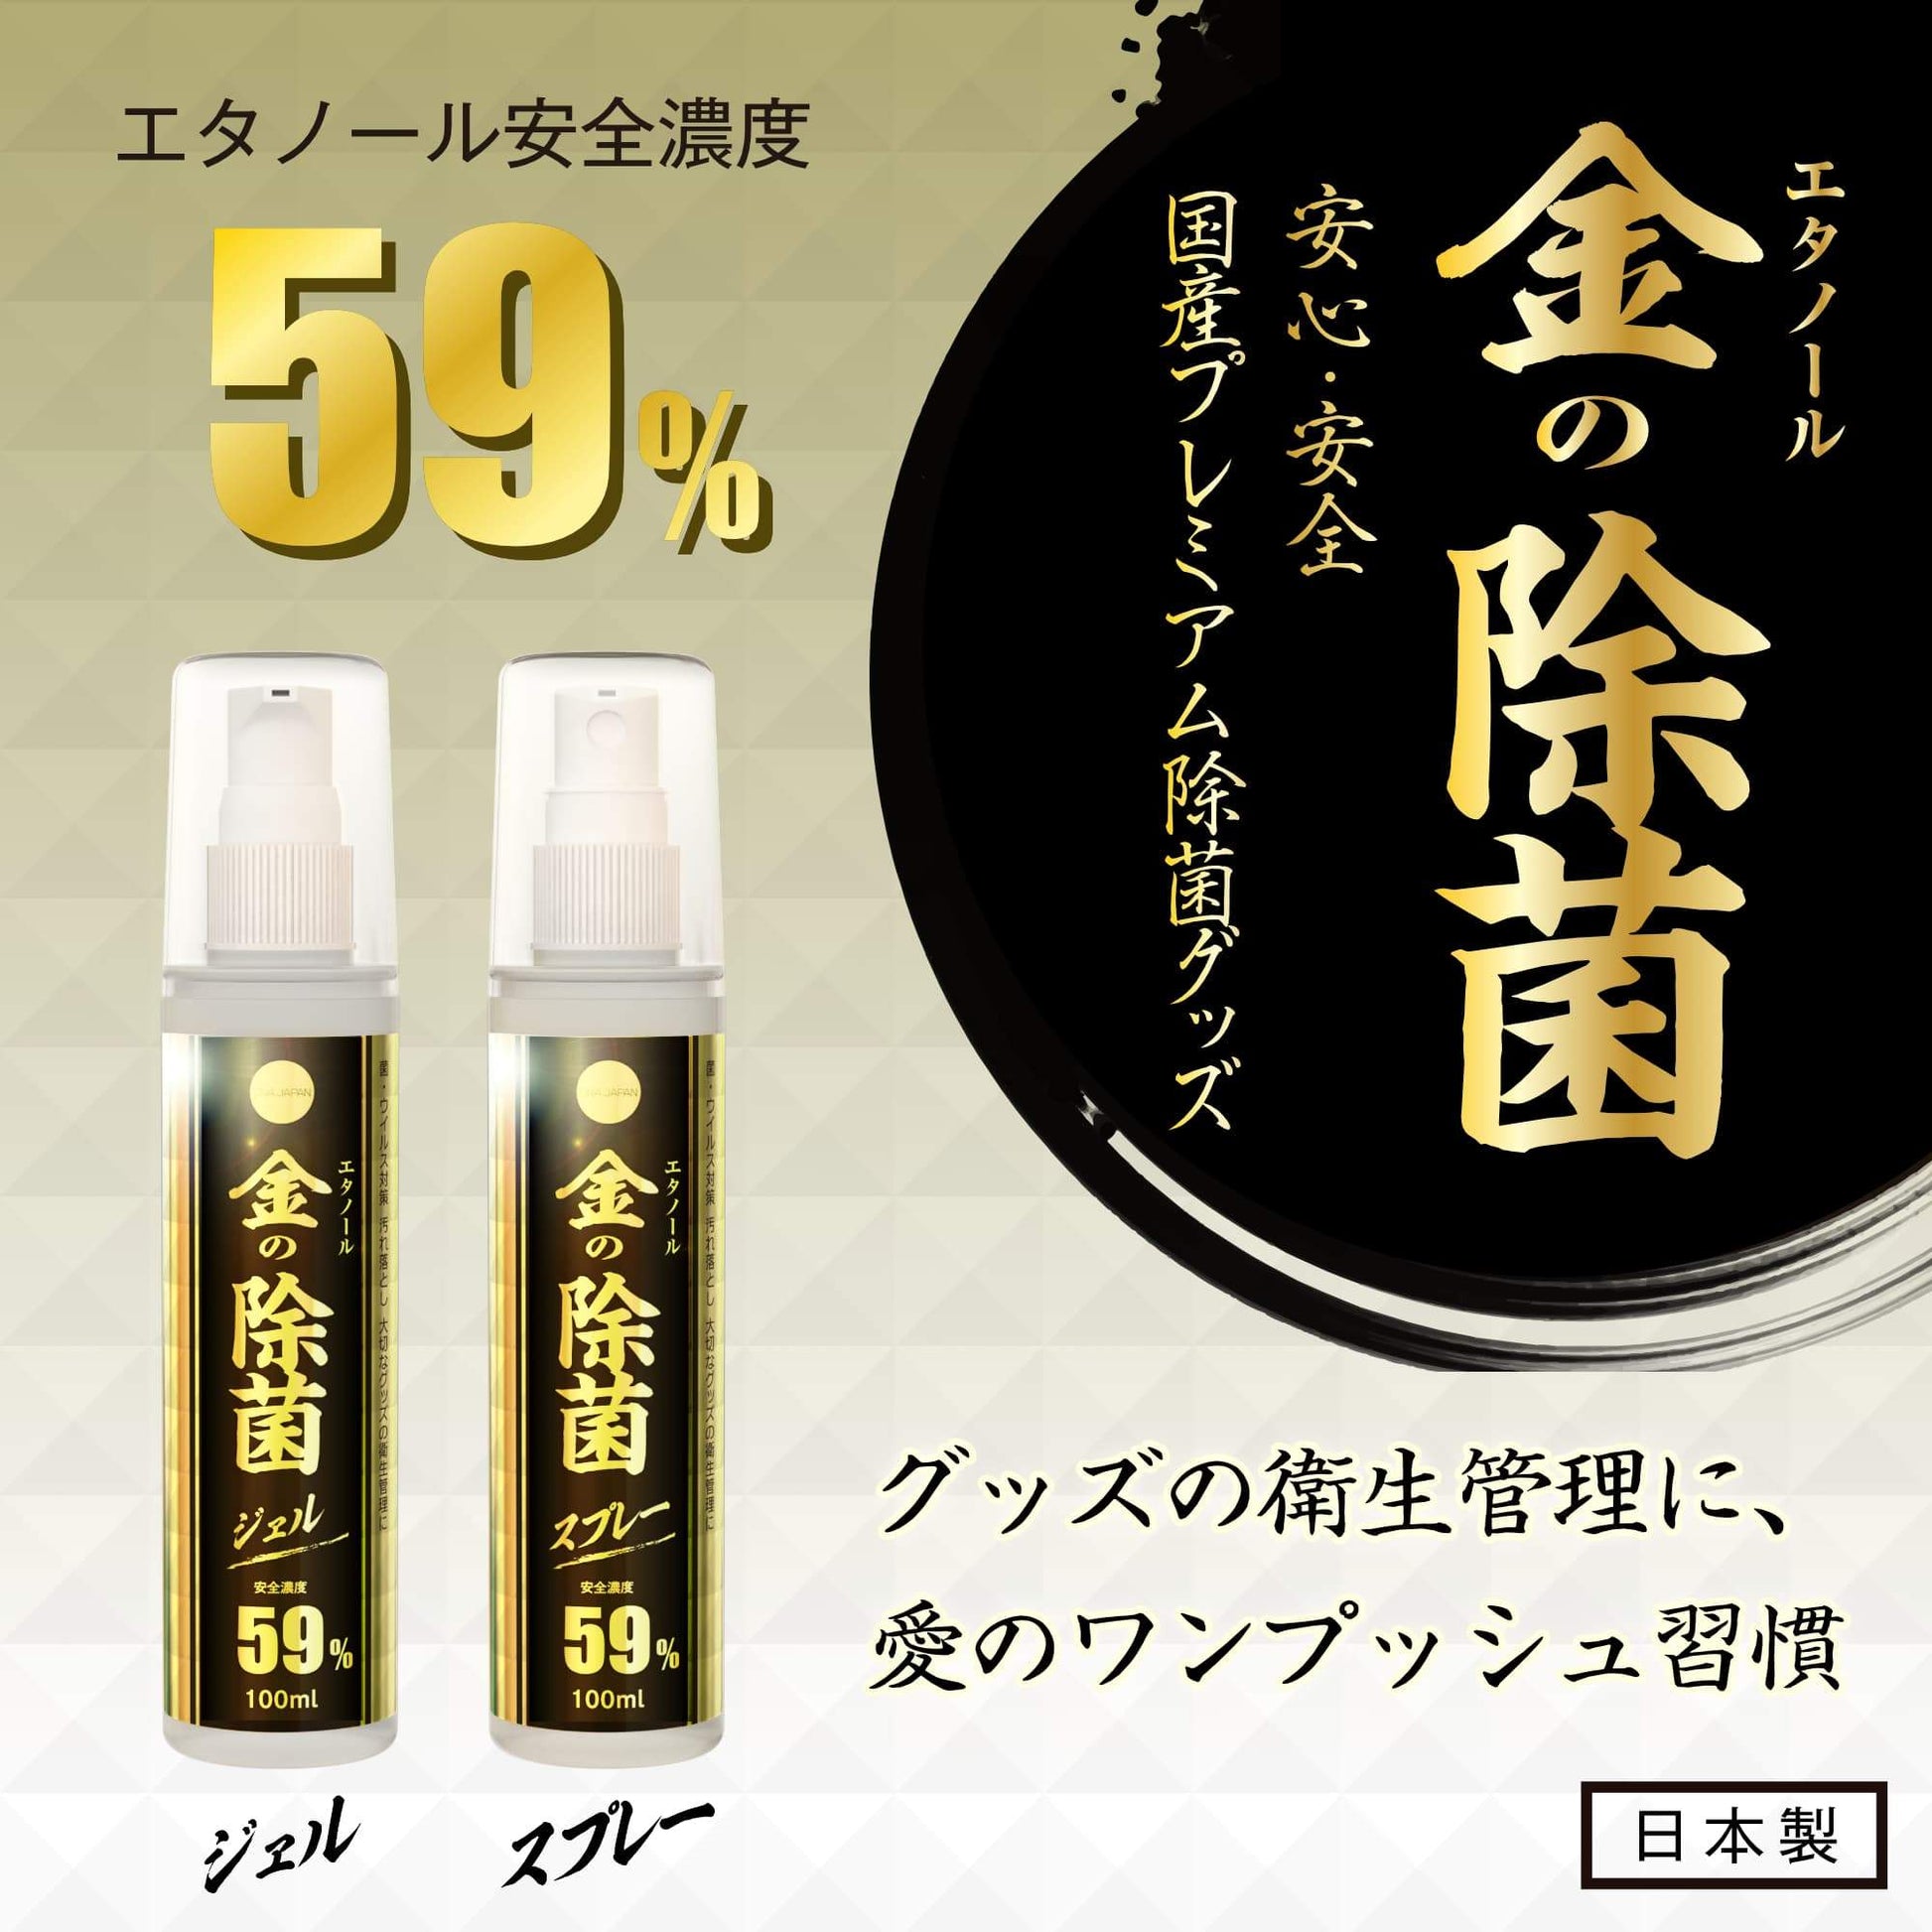 DNA JAPAN 黃金の酒精玩具消毒啫喱 100 毫升 情趣用品清潔及配件 購買